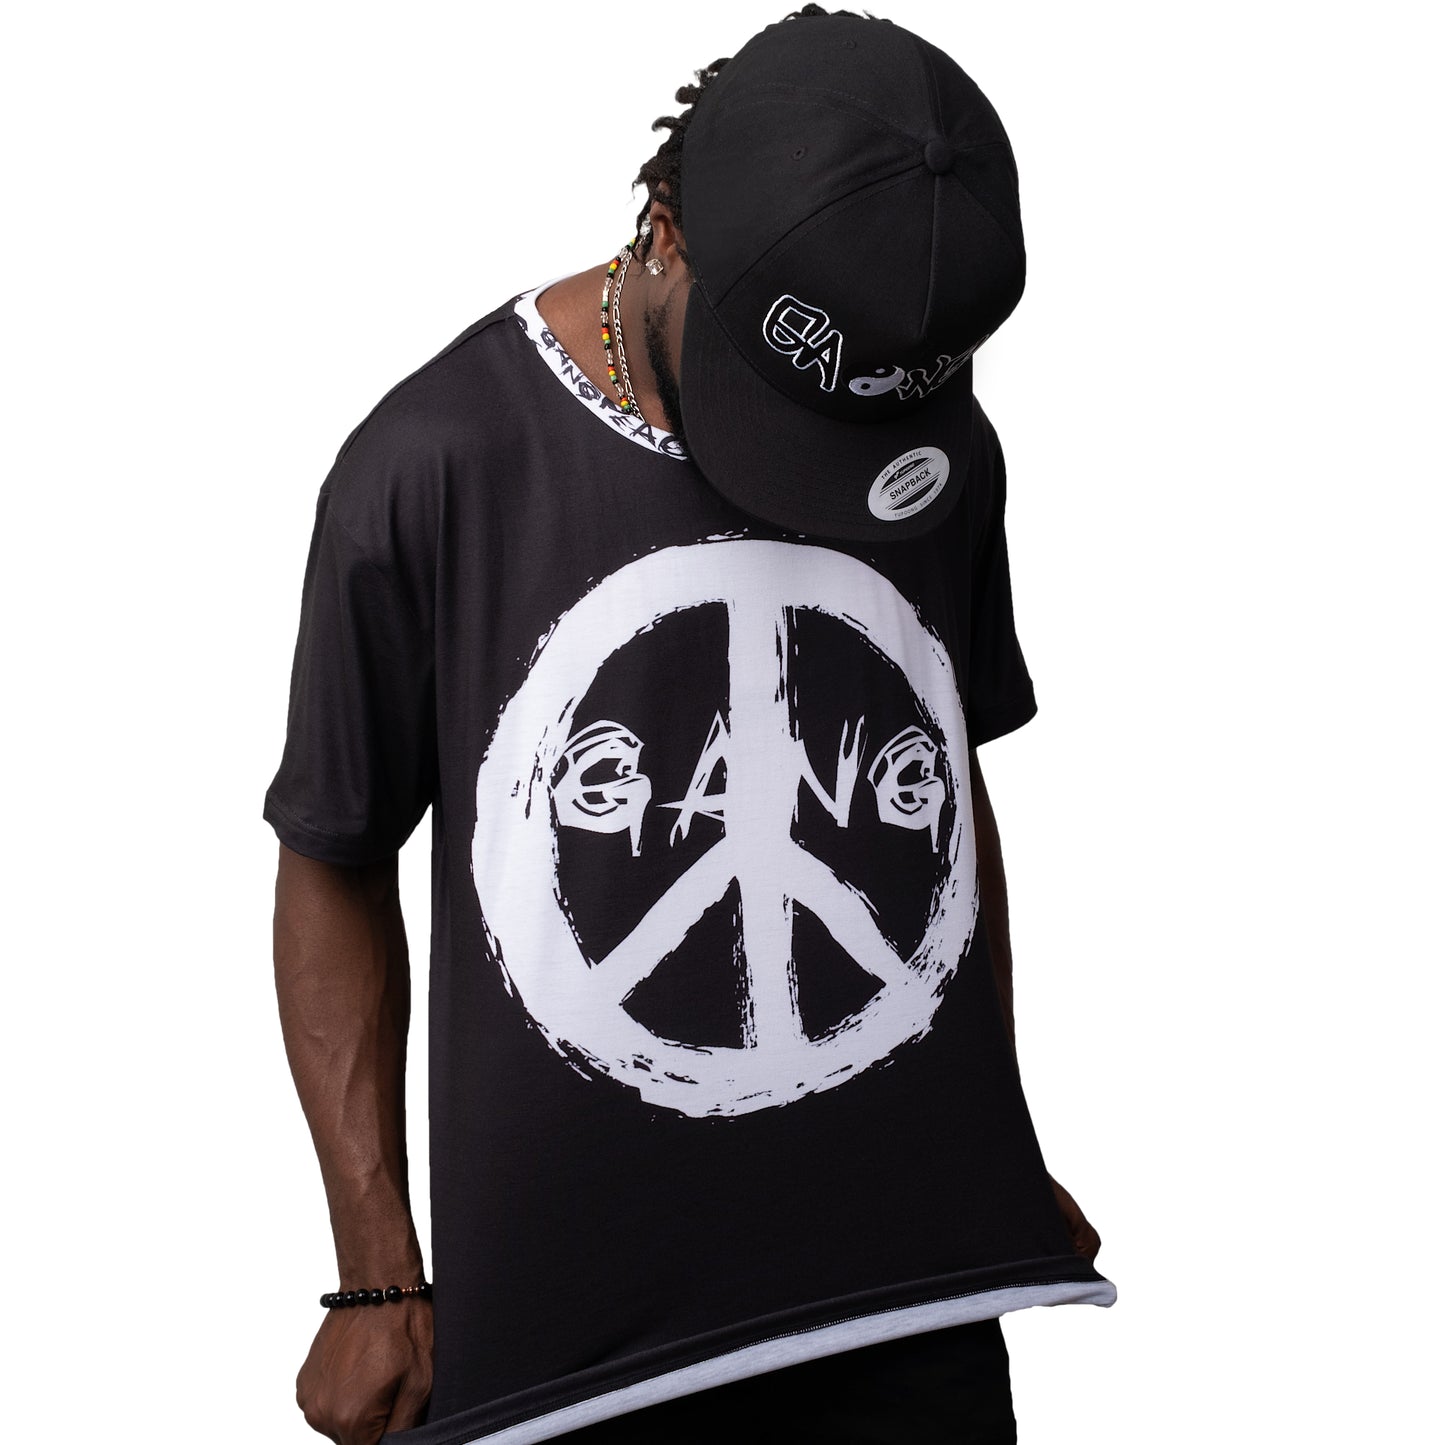 Unisex T-Shirt Black/White "Peace Grunge"  PEACE GANG